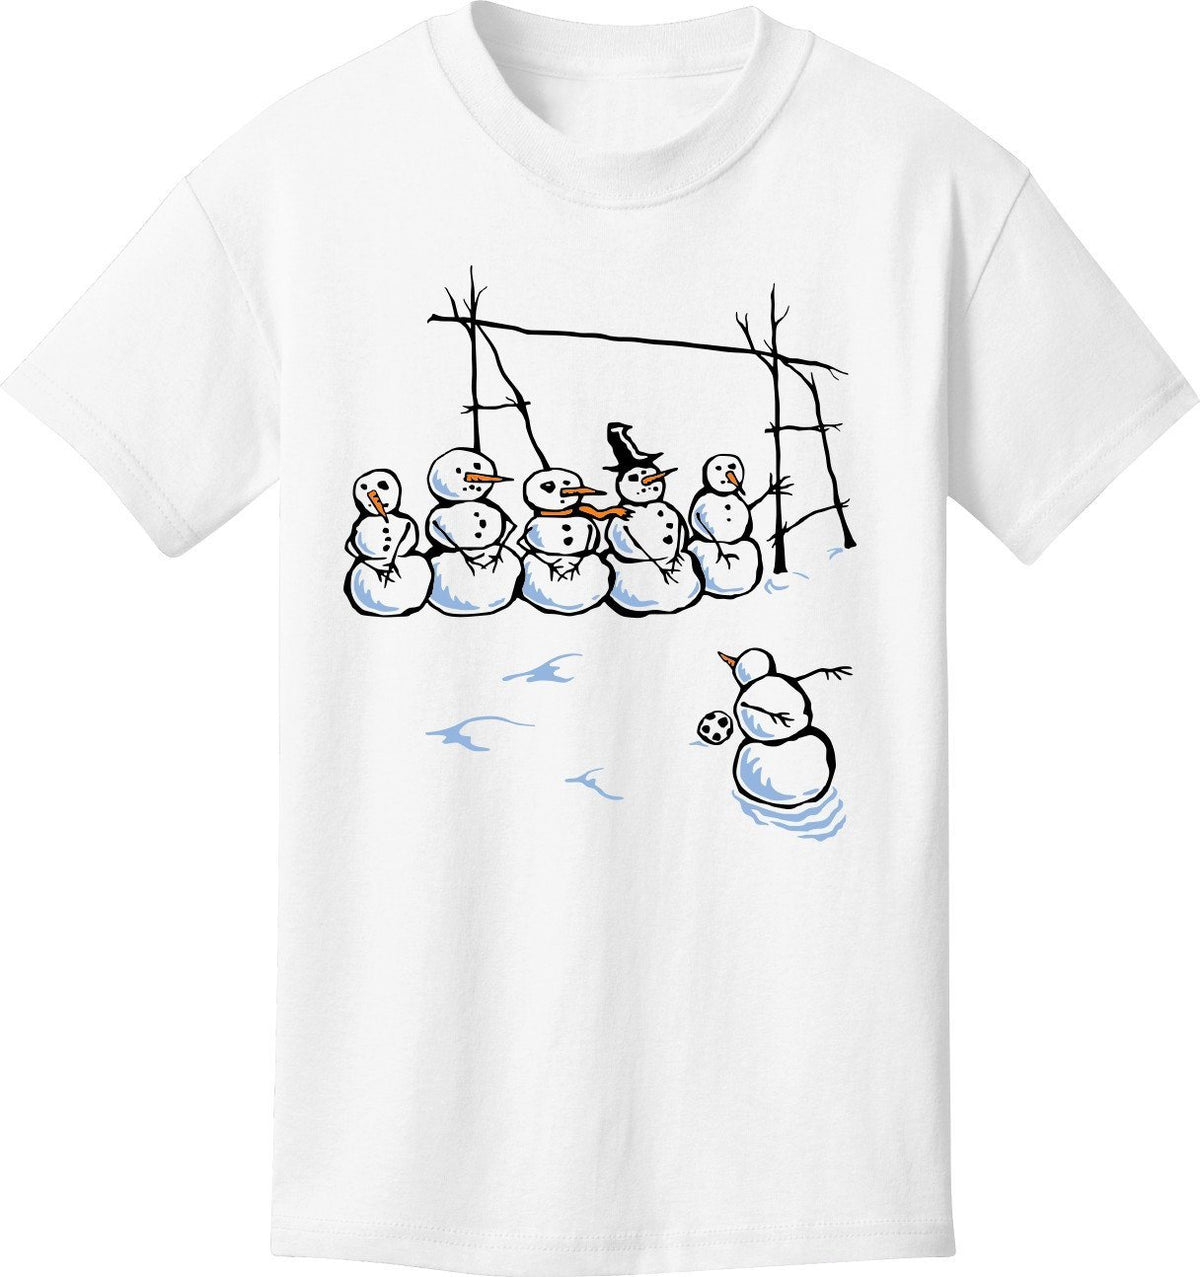 Utopia Frosty&#39;s Freekick Short Sleeve Soccer T-Shirt Humorous Shirt Utopia Adult Small White 